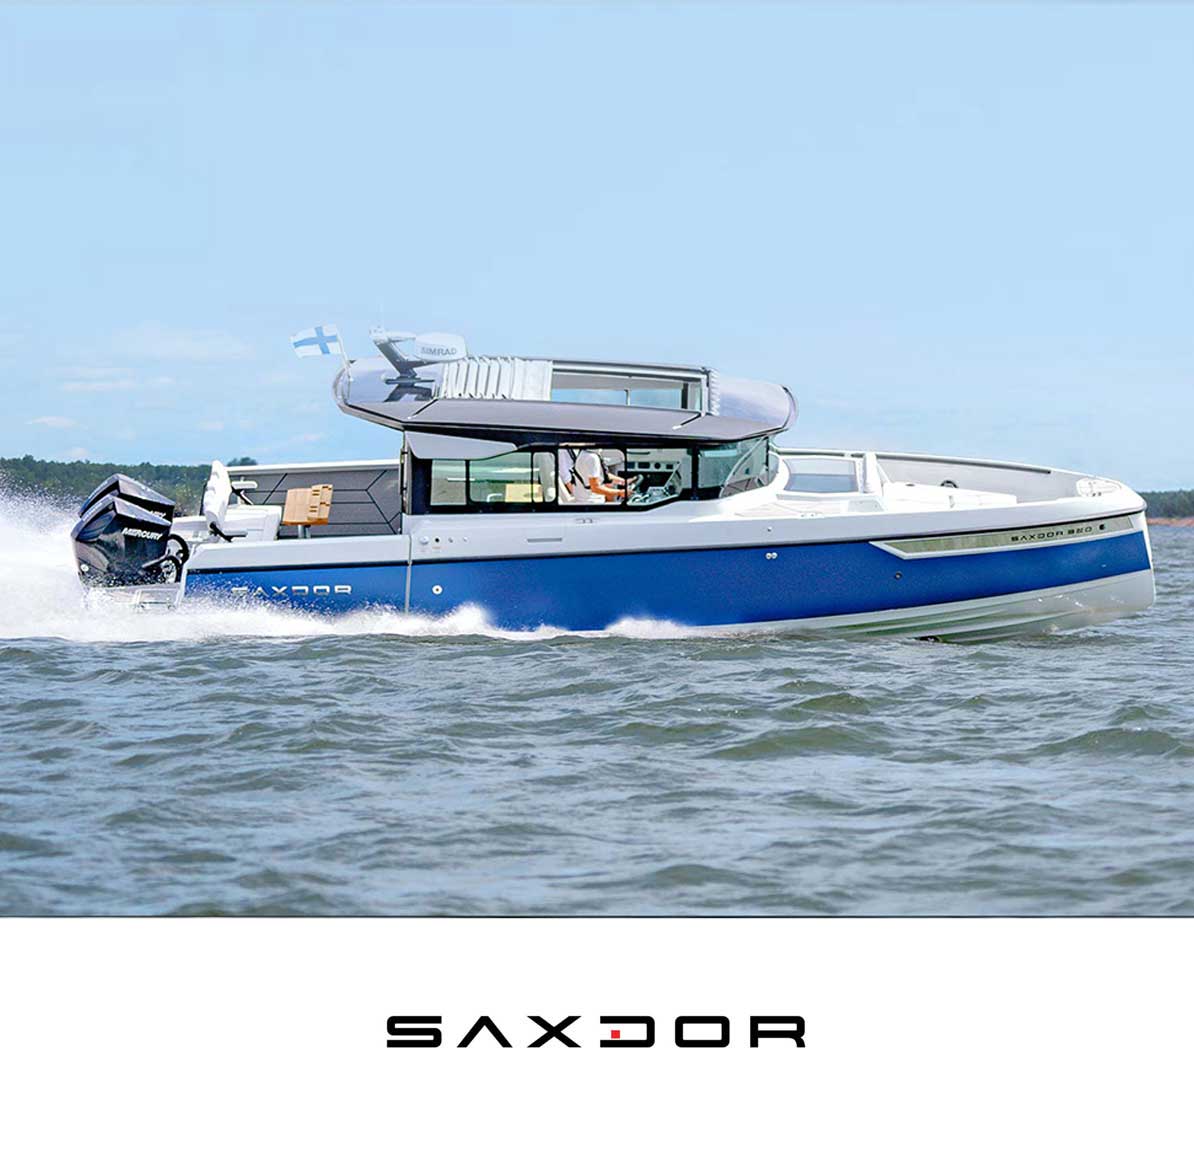 Saxdor Yachts